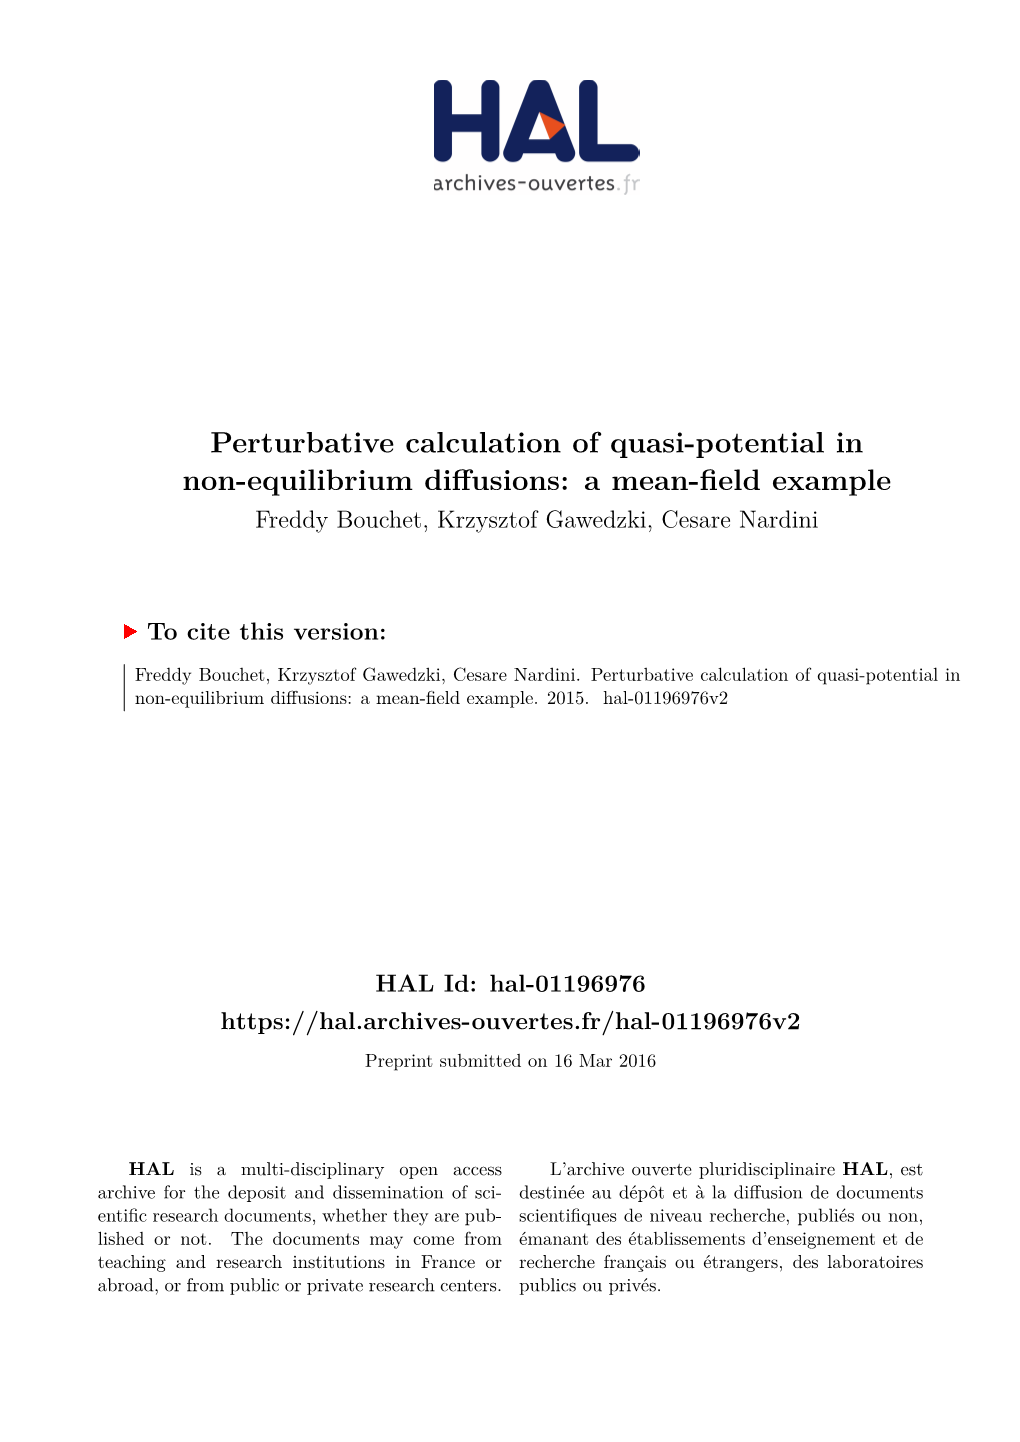 Perturbative Calculation of Quasi-Potential in Non-Equilibrium Diffusions: a Mean-Field Example Freddy Bouchet, Krzysztof Gawedzki, Cesare Nardini